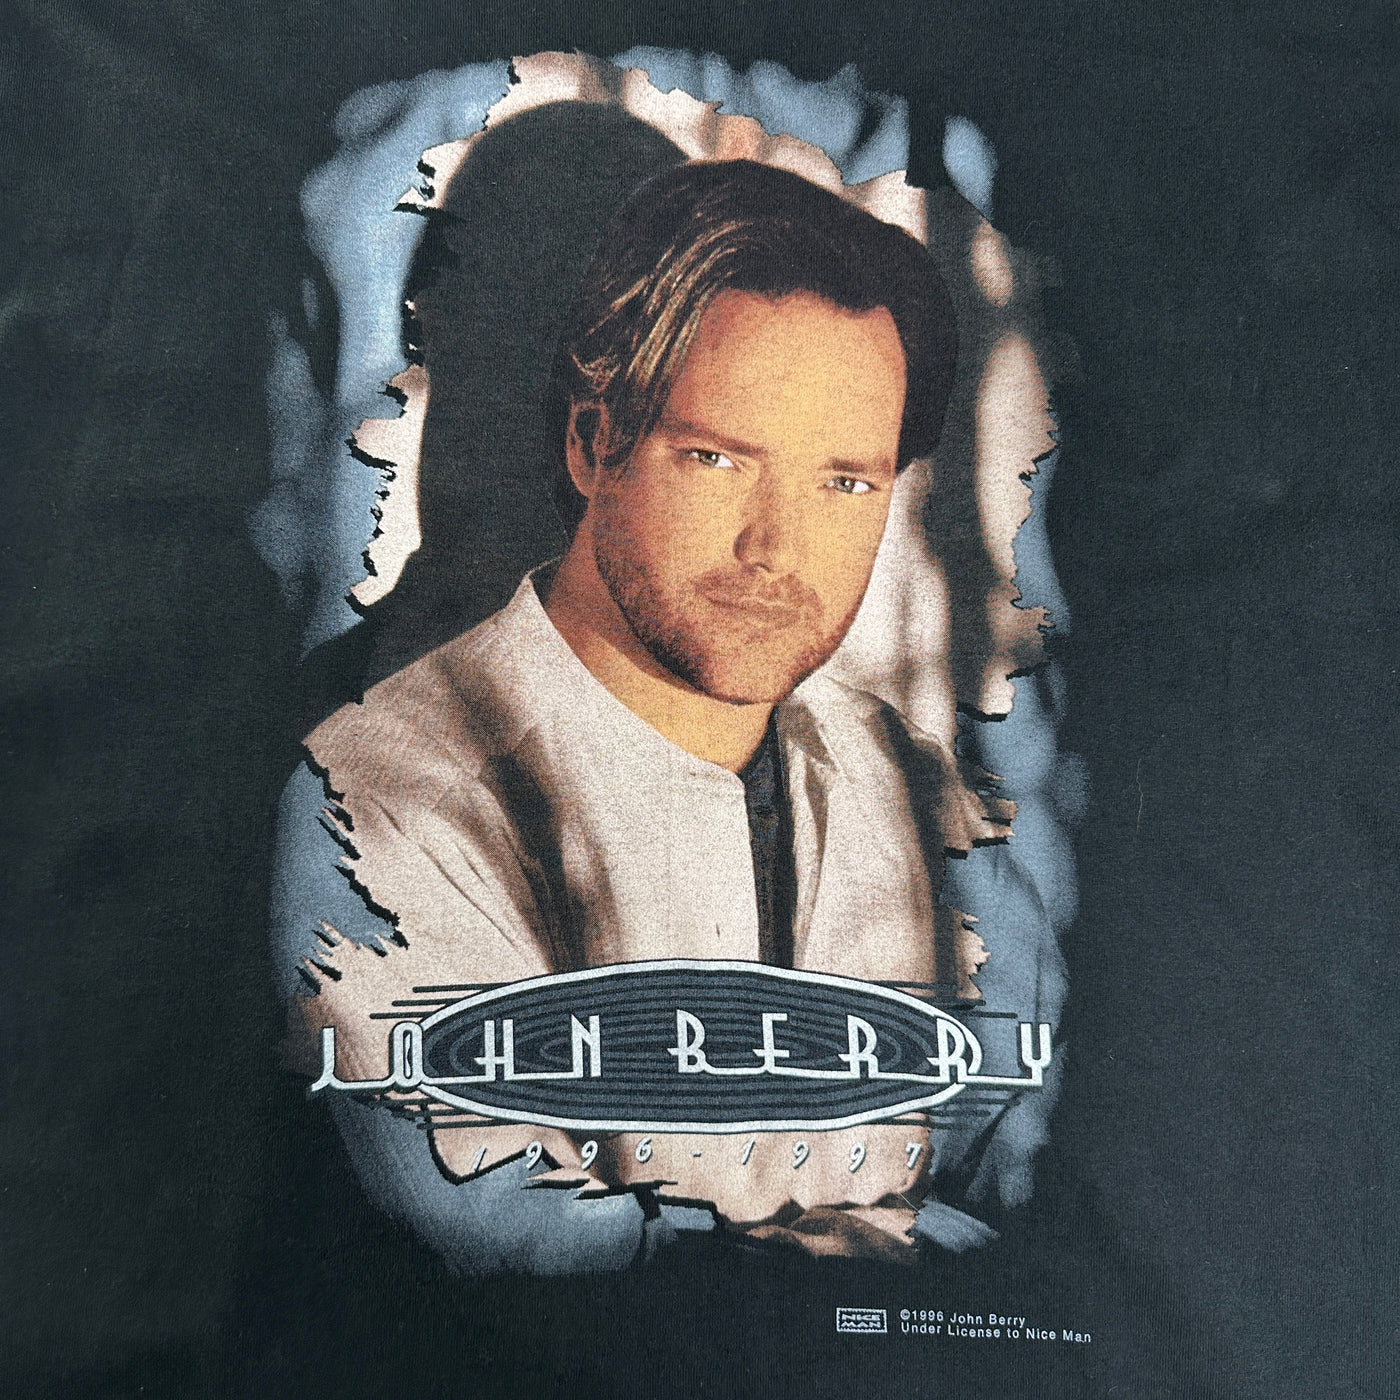 1996 John Berry Black Music T-shirt sz 2XL